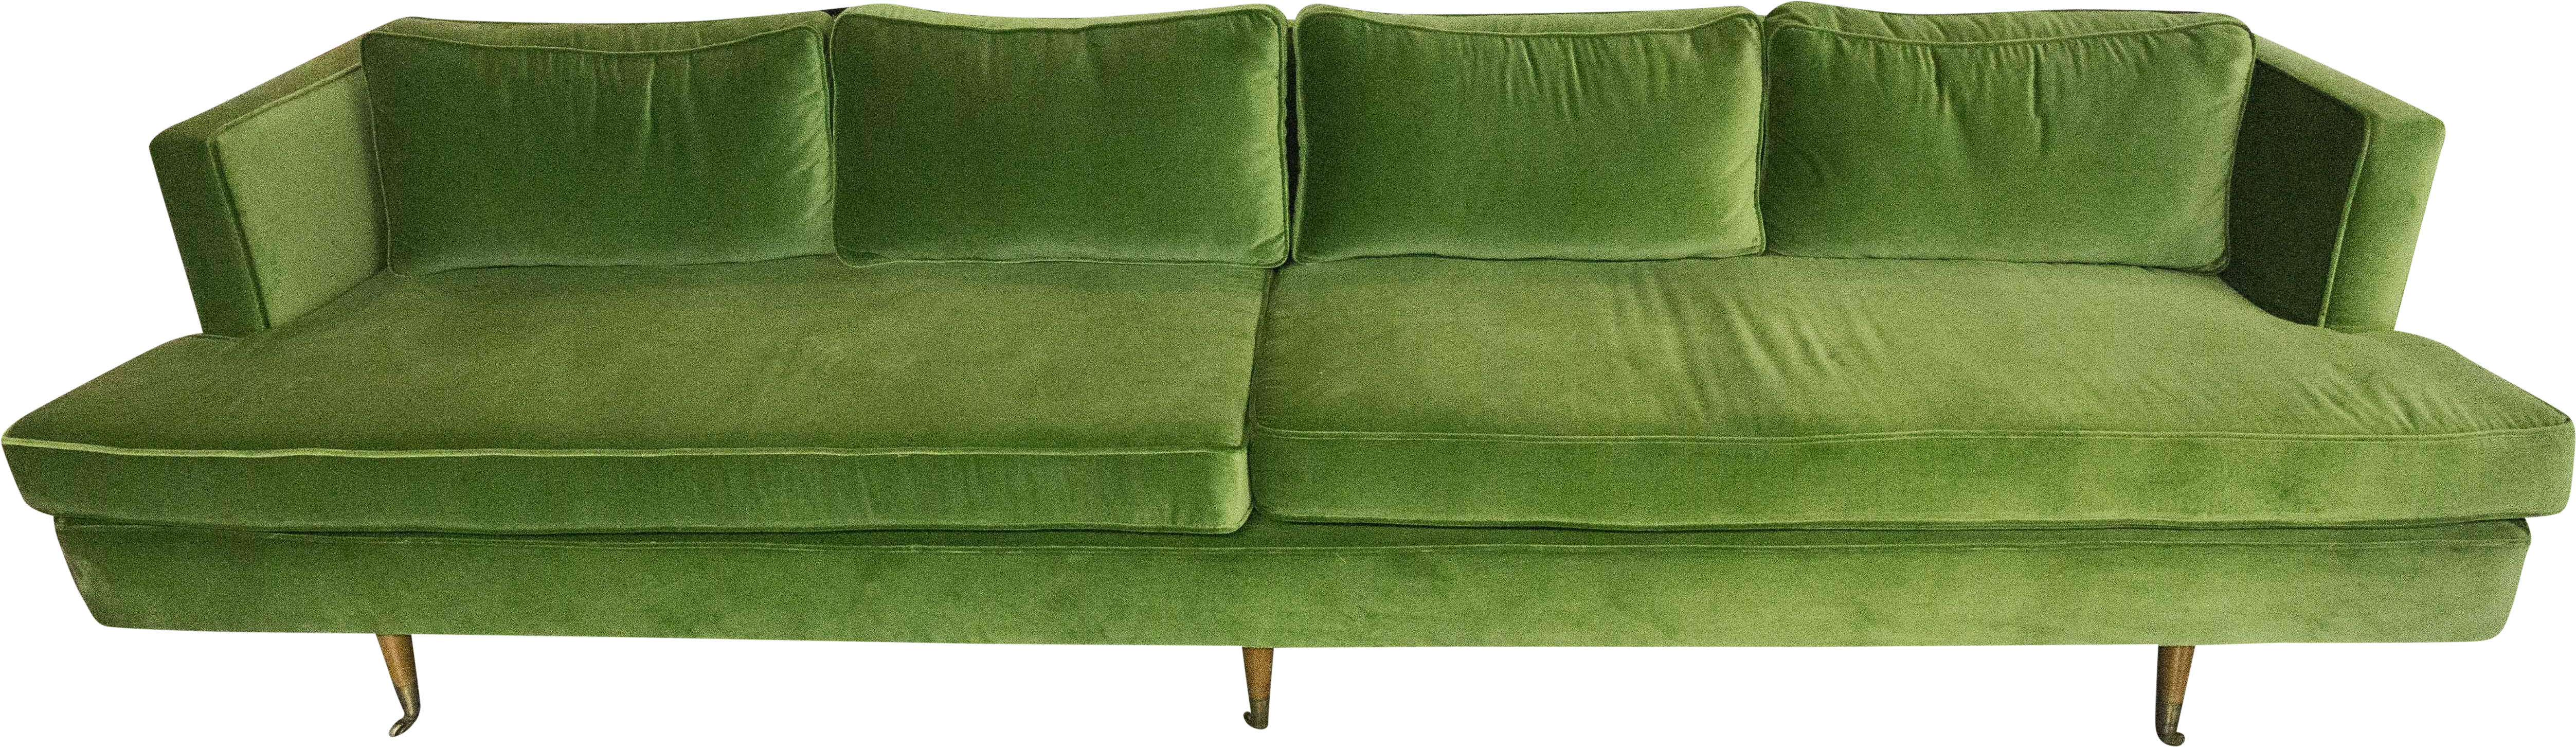 Vintage Davenport Green Velvet Sofa On Chairish Studio